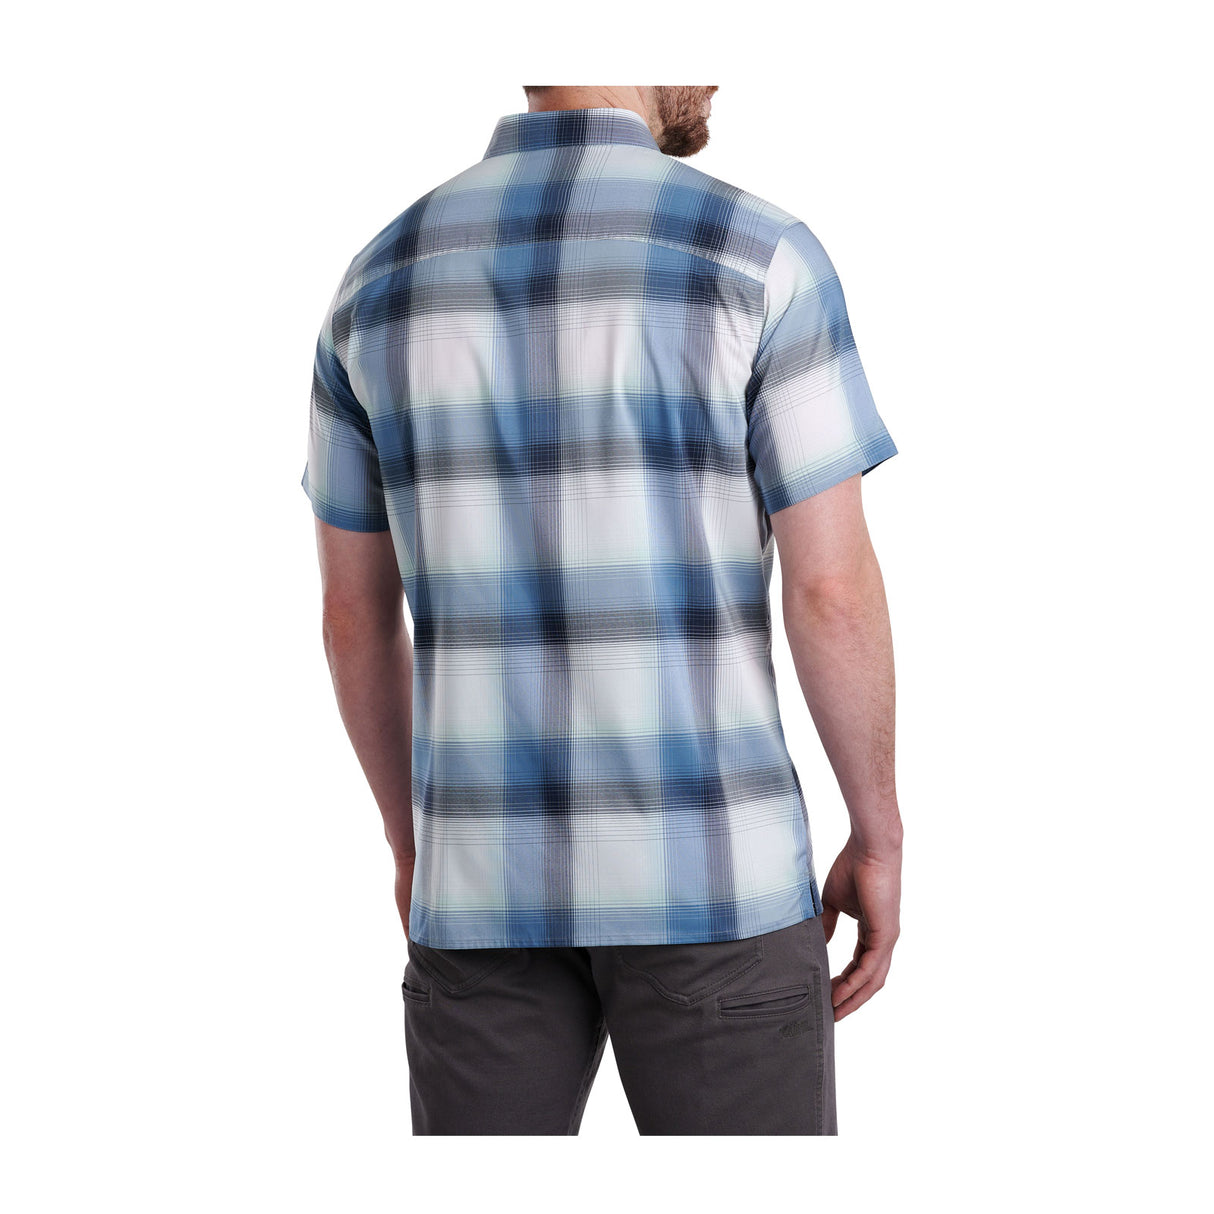 Kuhl Response Short Sleeve Shirt (Men) - Brisk Blue Apparel - Top - Short Sleeve - The Heel Shoe Fitters